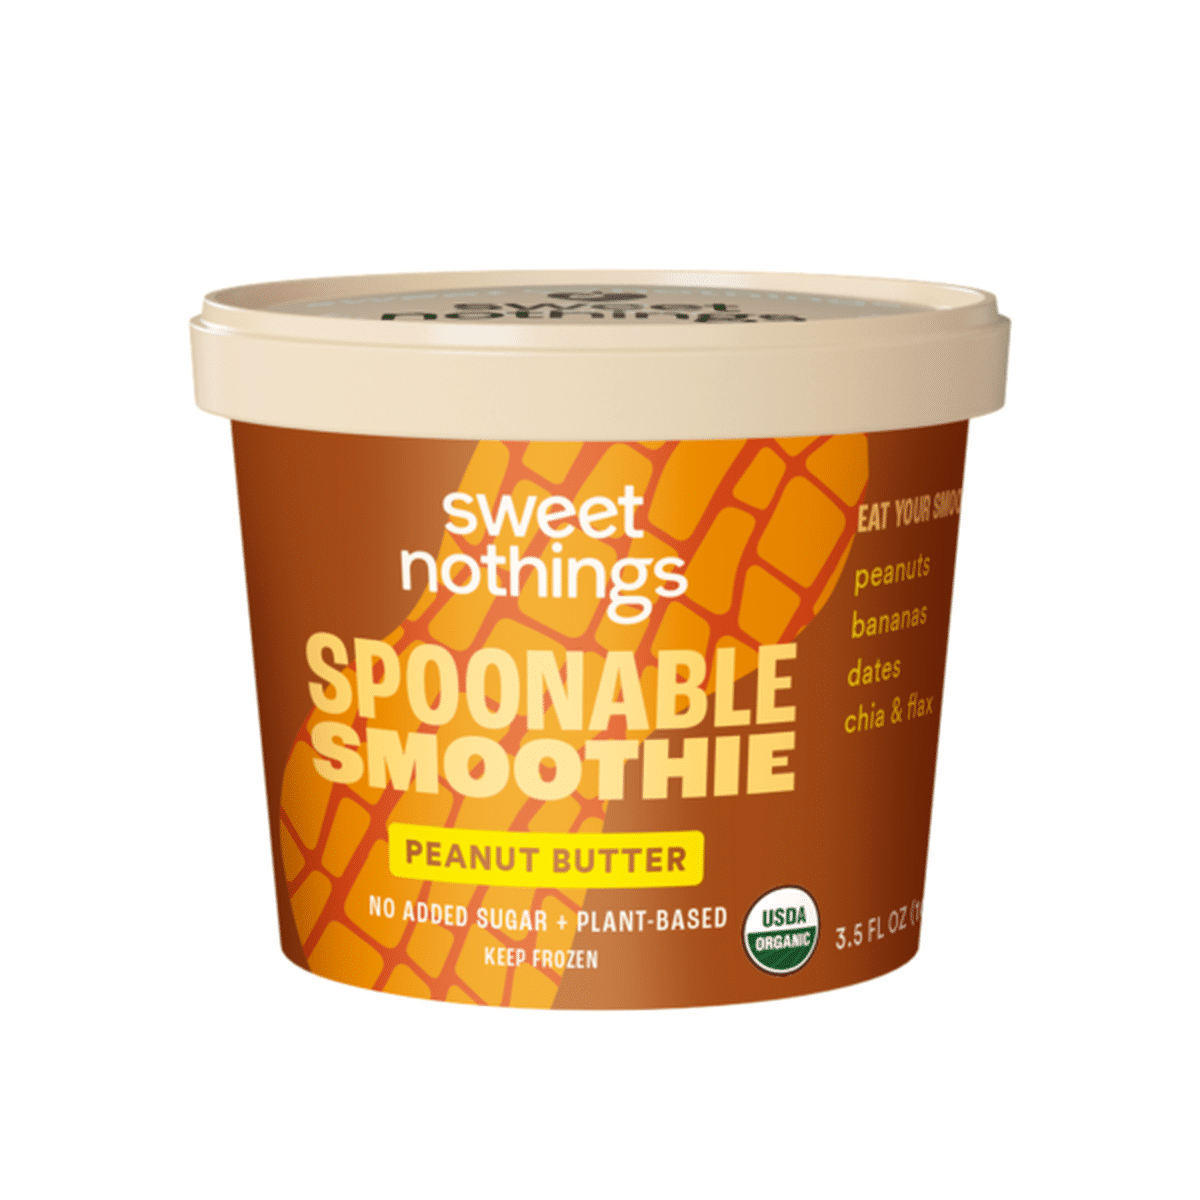 Sweet Nothings Spoonable Smoothie Reviews